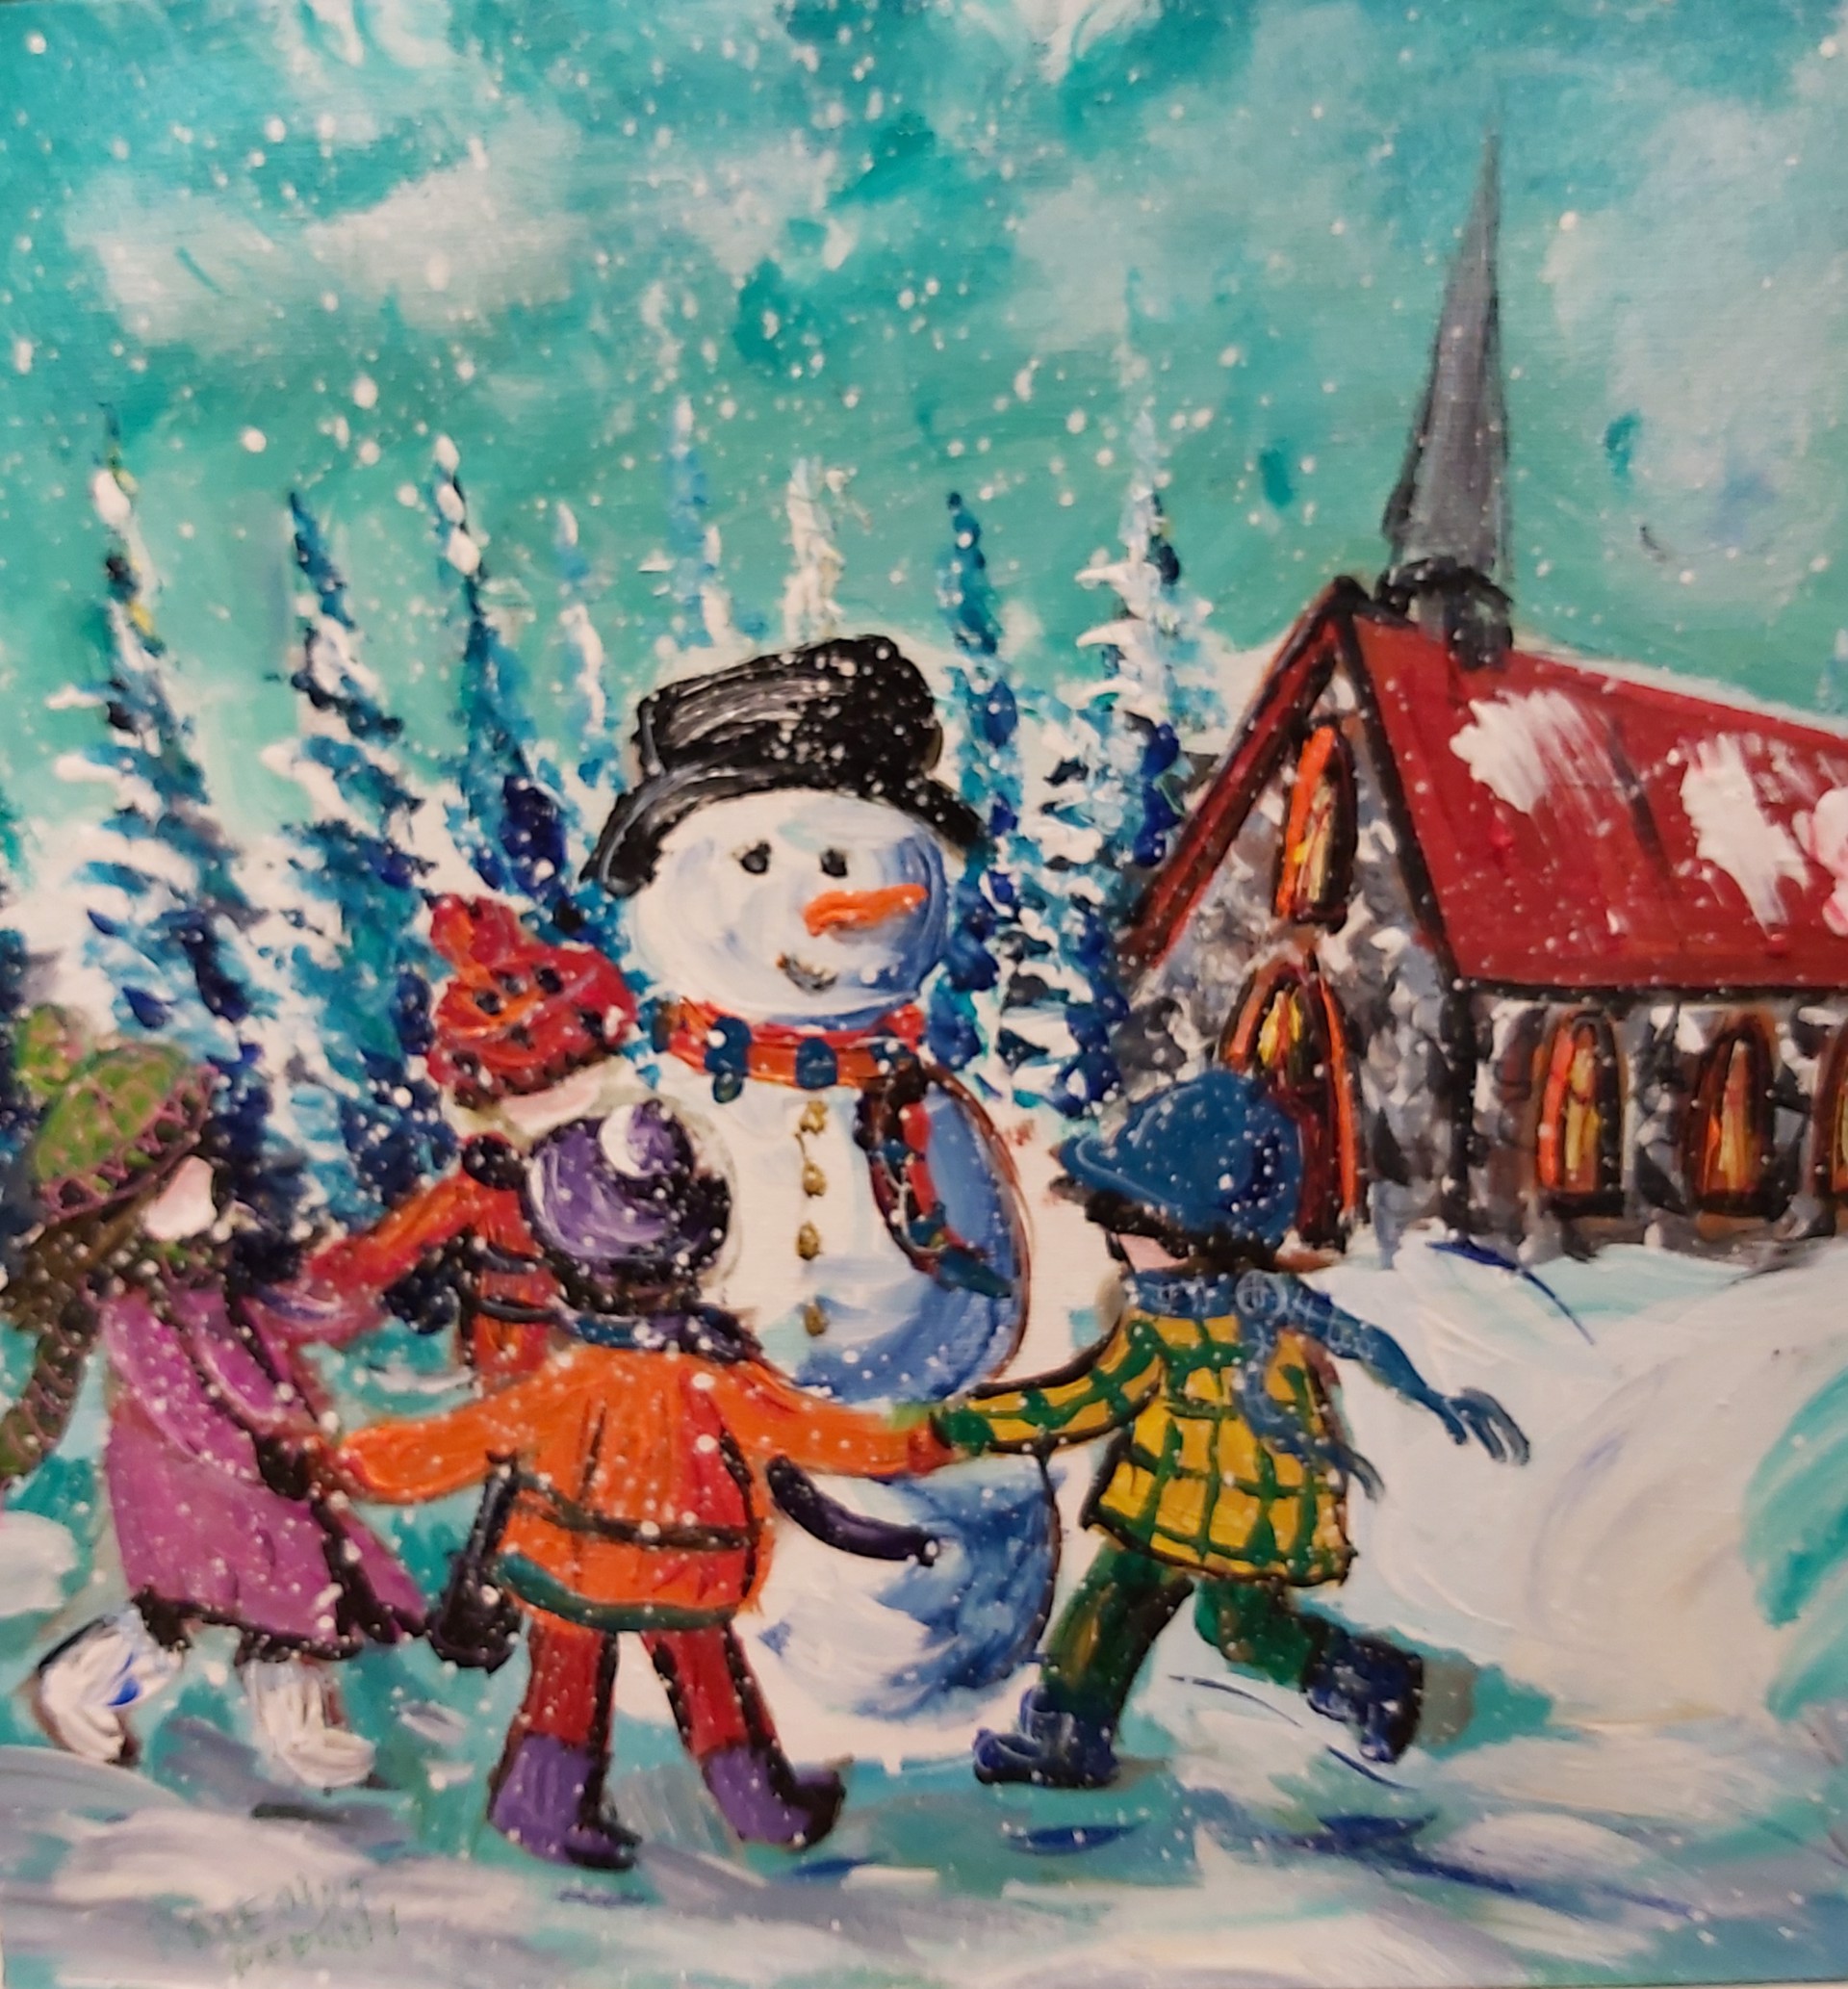 Dance around the snowman by Katerina Mertikas